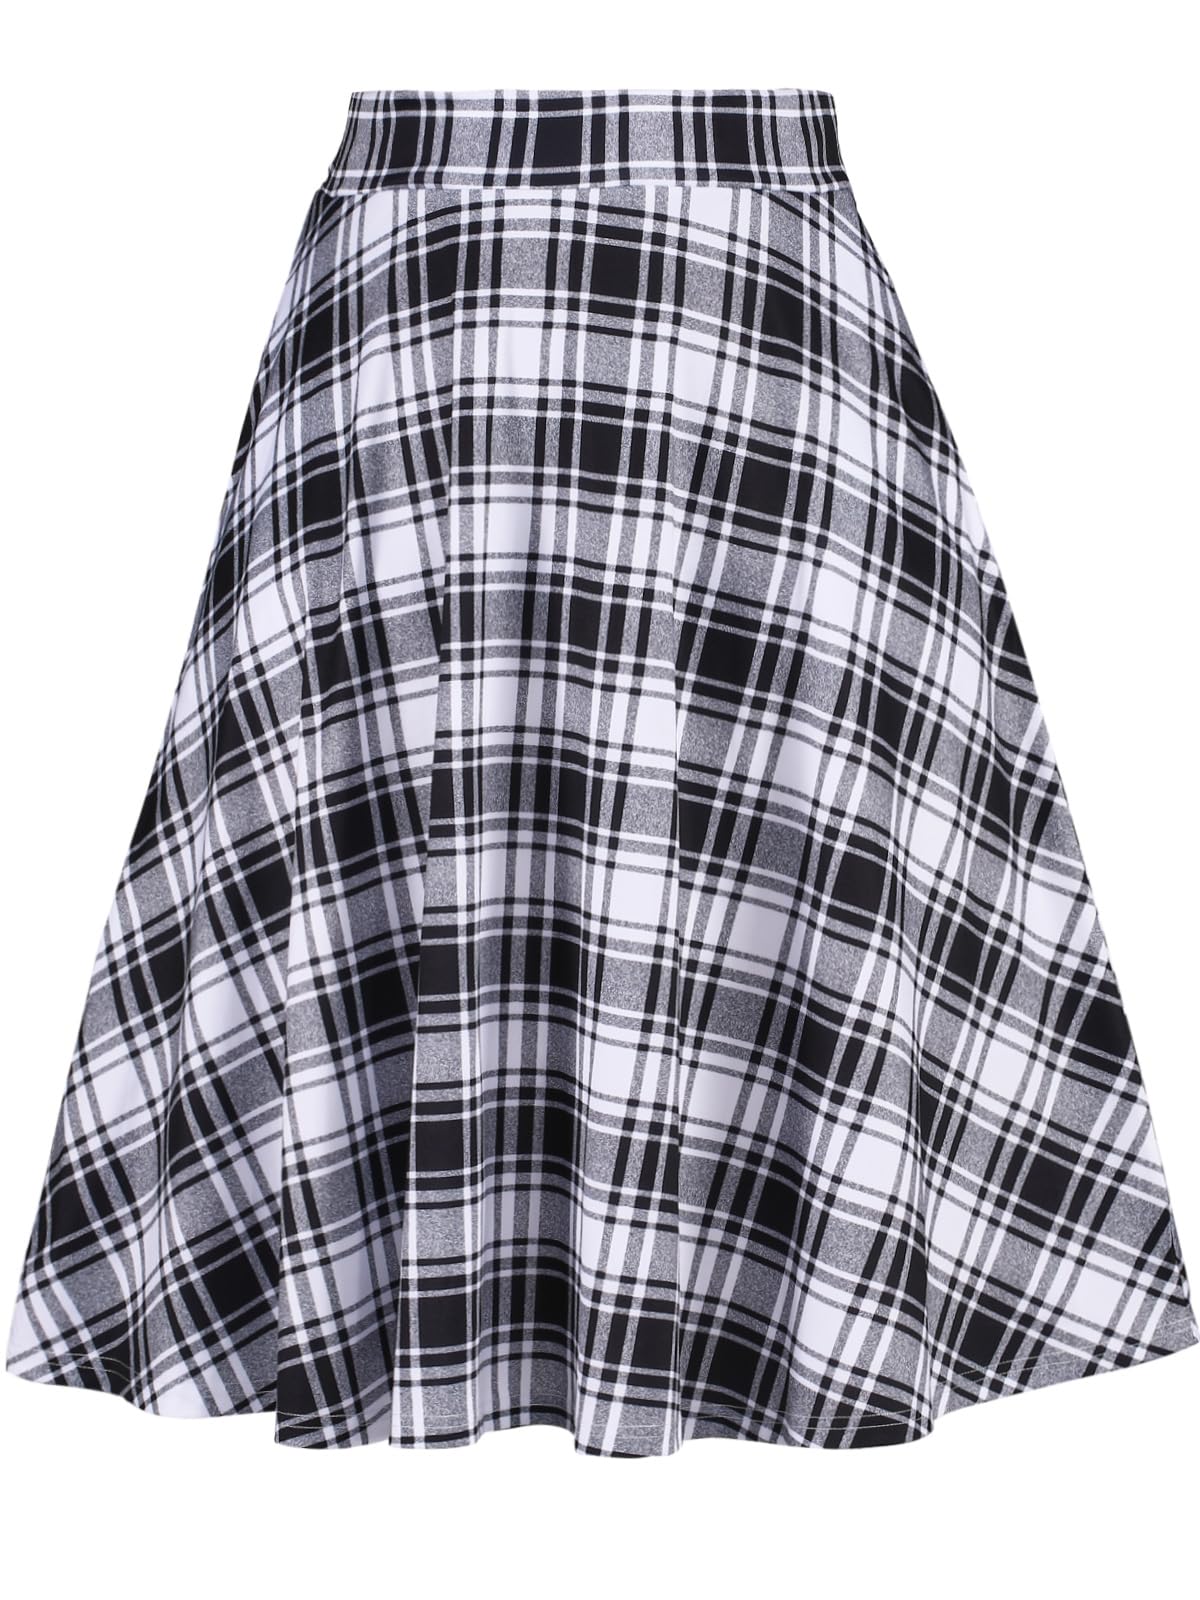 Plus Size Midi Plaid Skirt High Waisted Flared-Black & White - Moon Wood